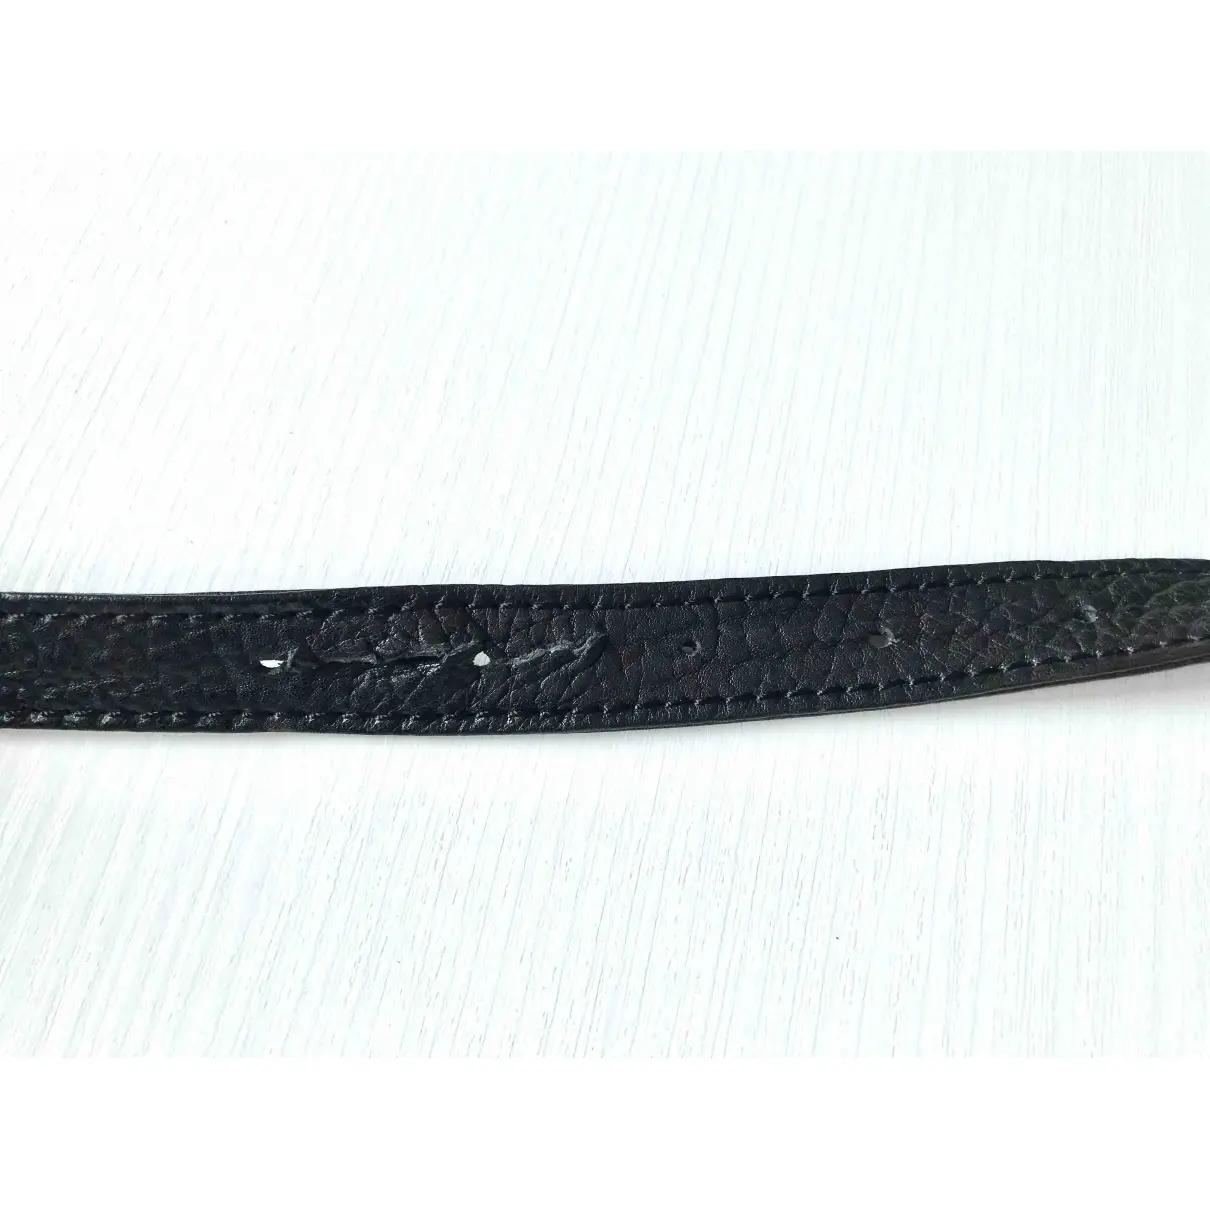 Ugo Cacciatori Leather belt for sale